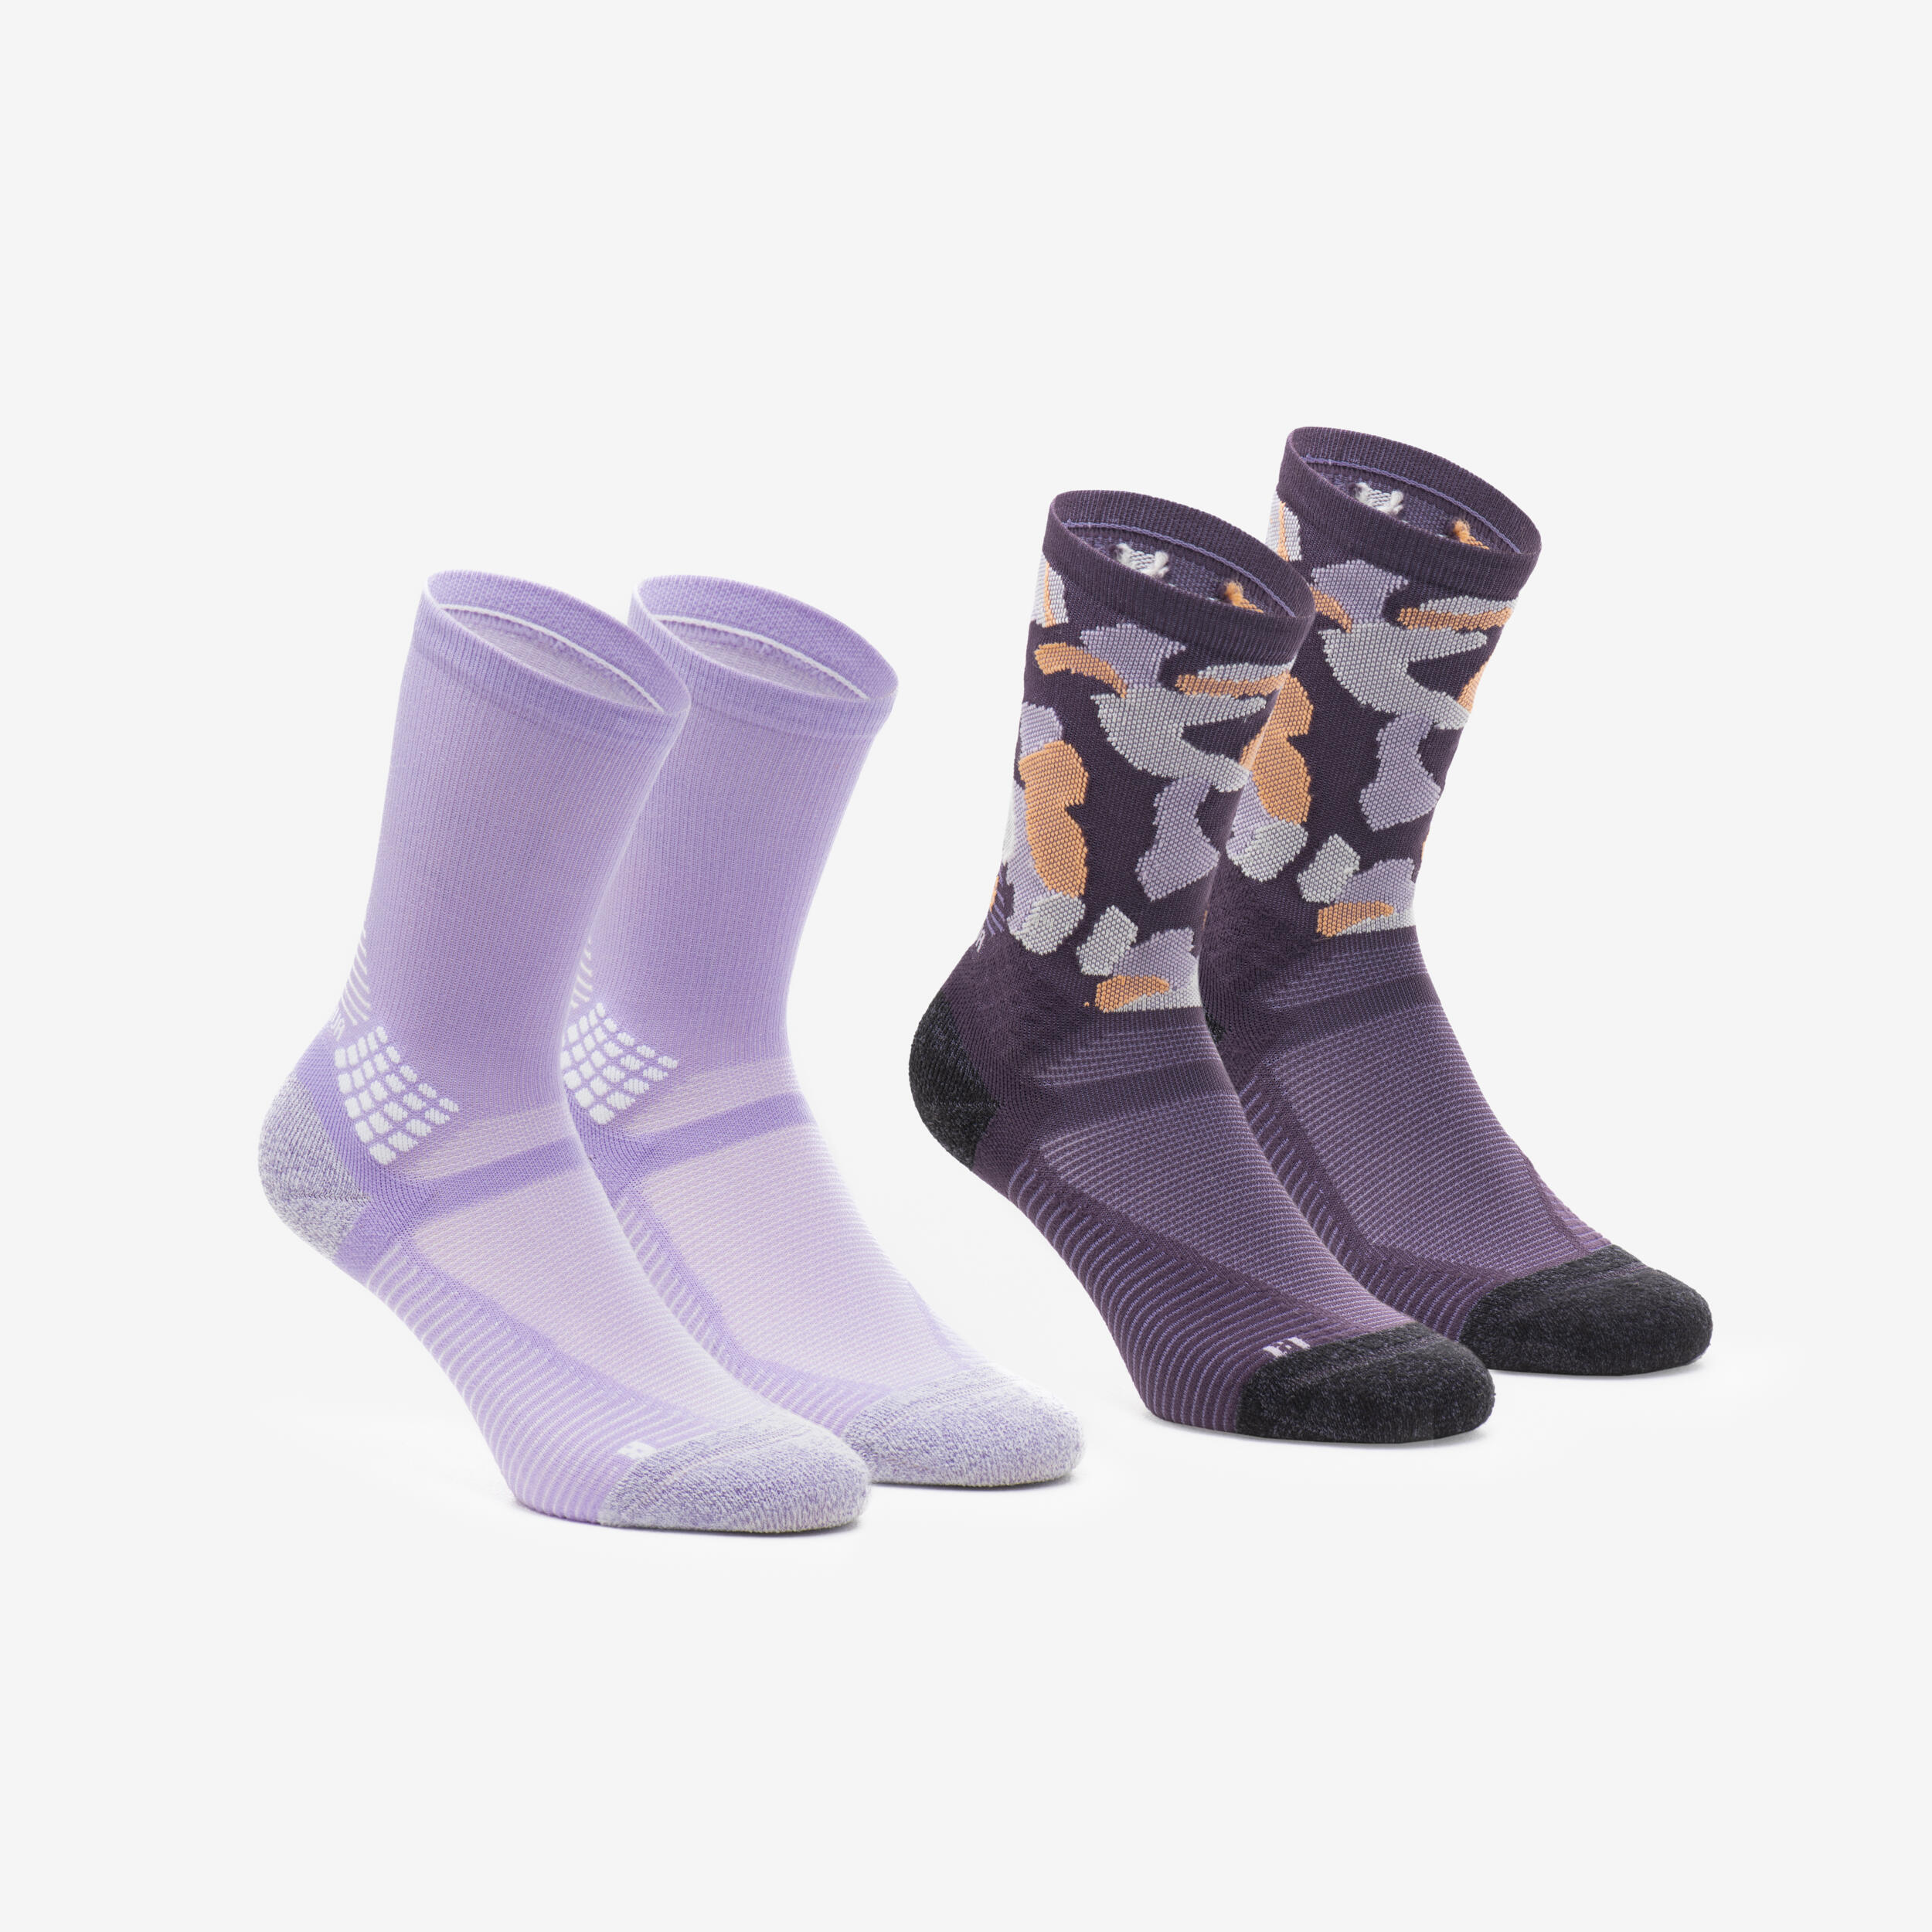 Hiking Socks Hike 500 High Trendy x2 Pairs - Purple & Kamo 1/13